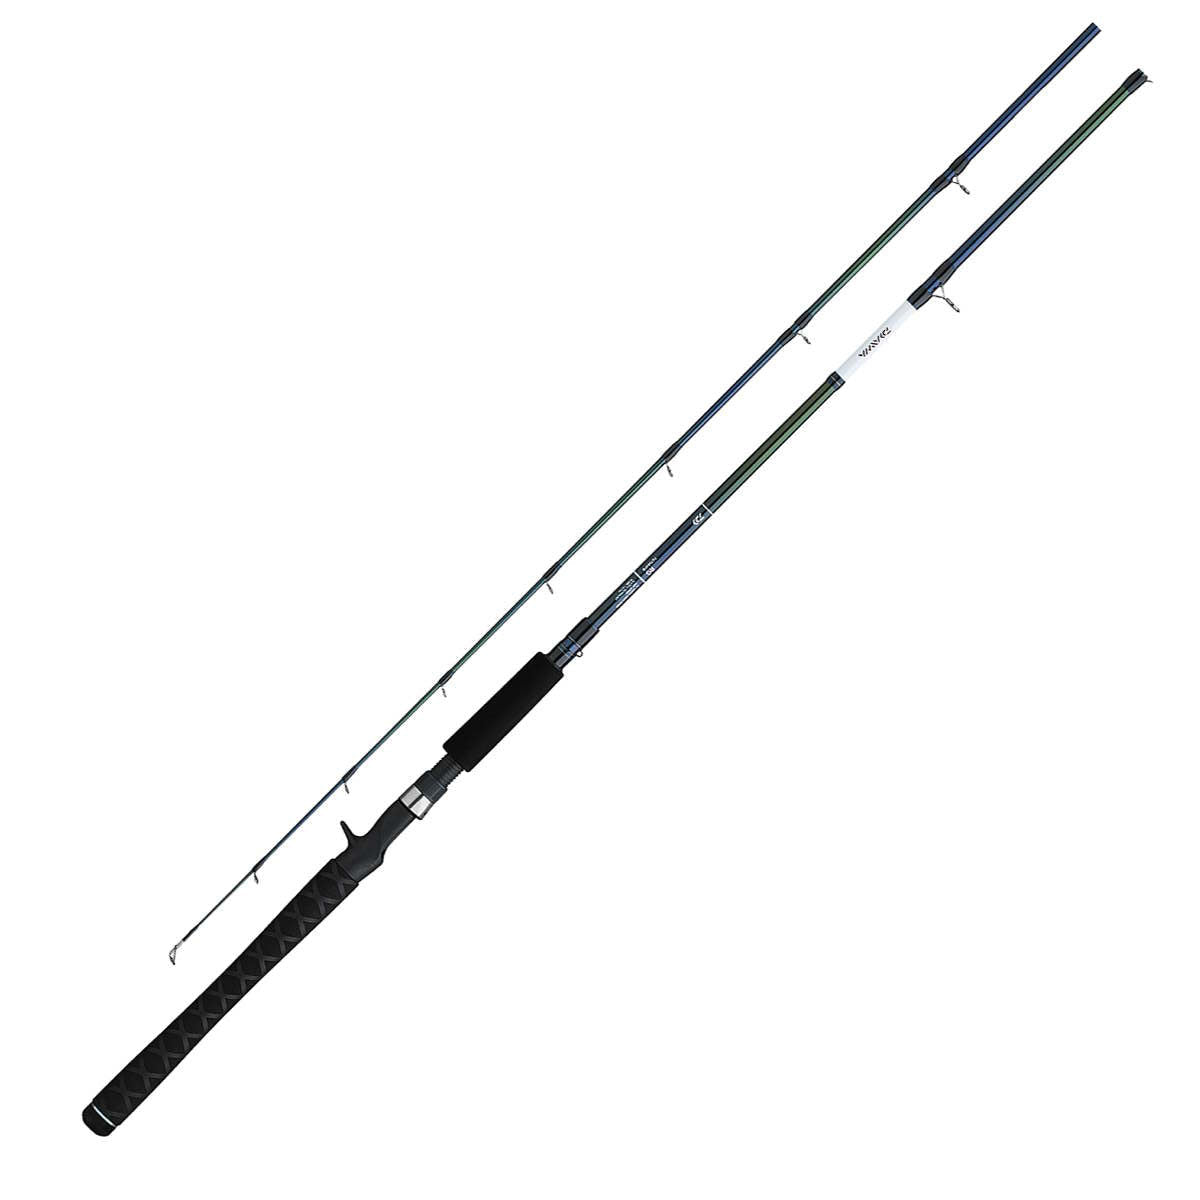 Photo of Daiwa RG Walleye Trolling Rod for sale at United Tackle Shops.